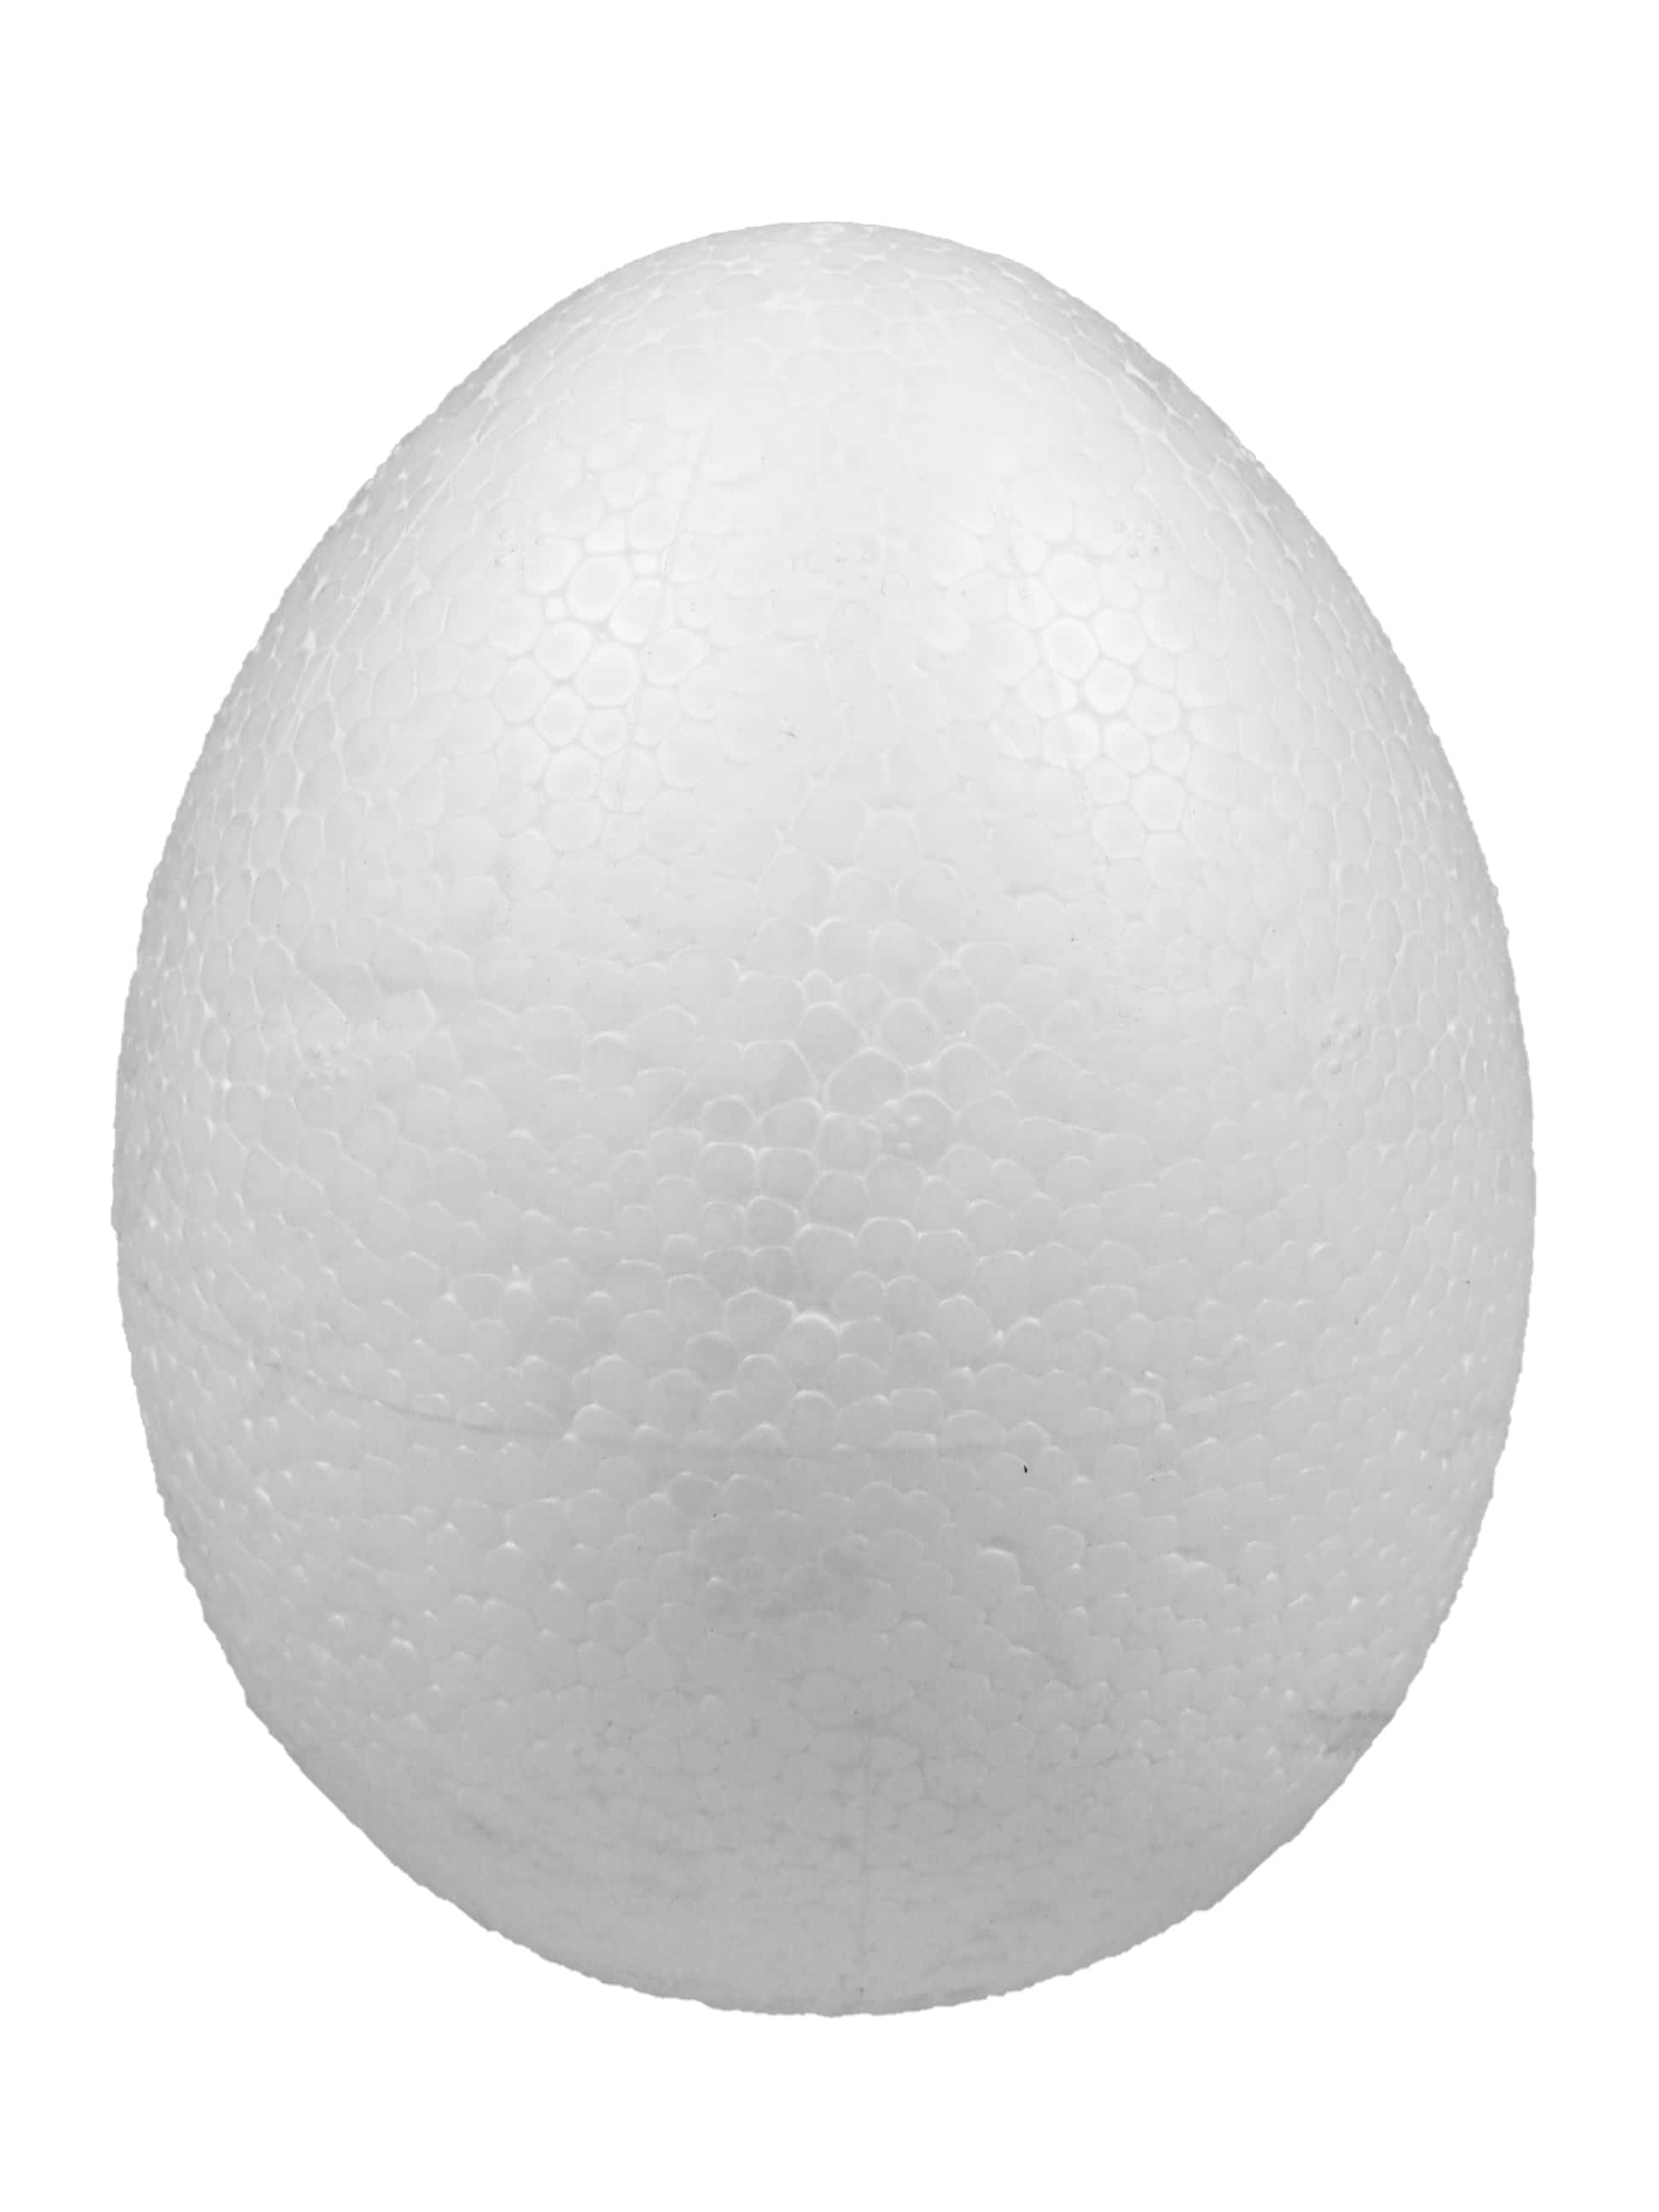 Polystyrol Ei, voll, Ø 60mm, 1 Stück